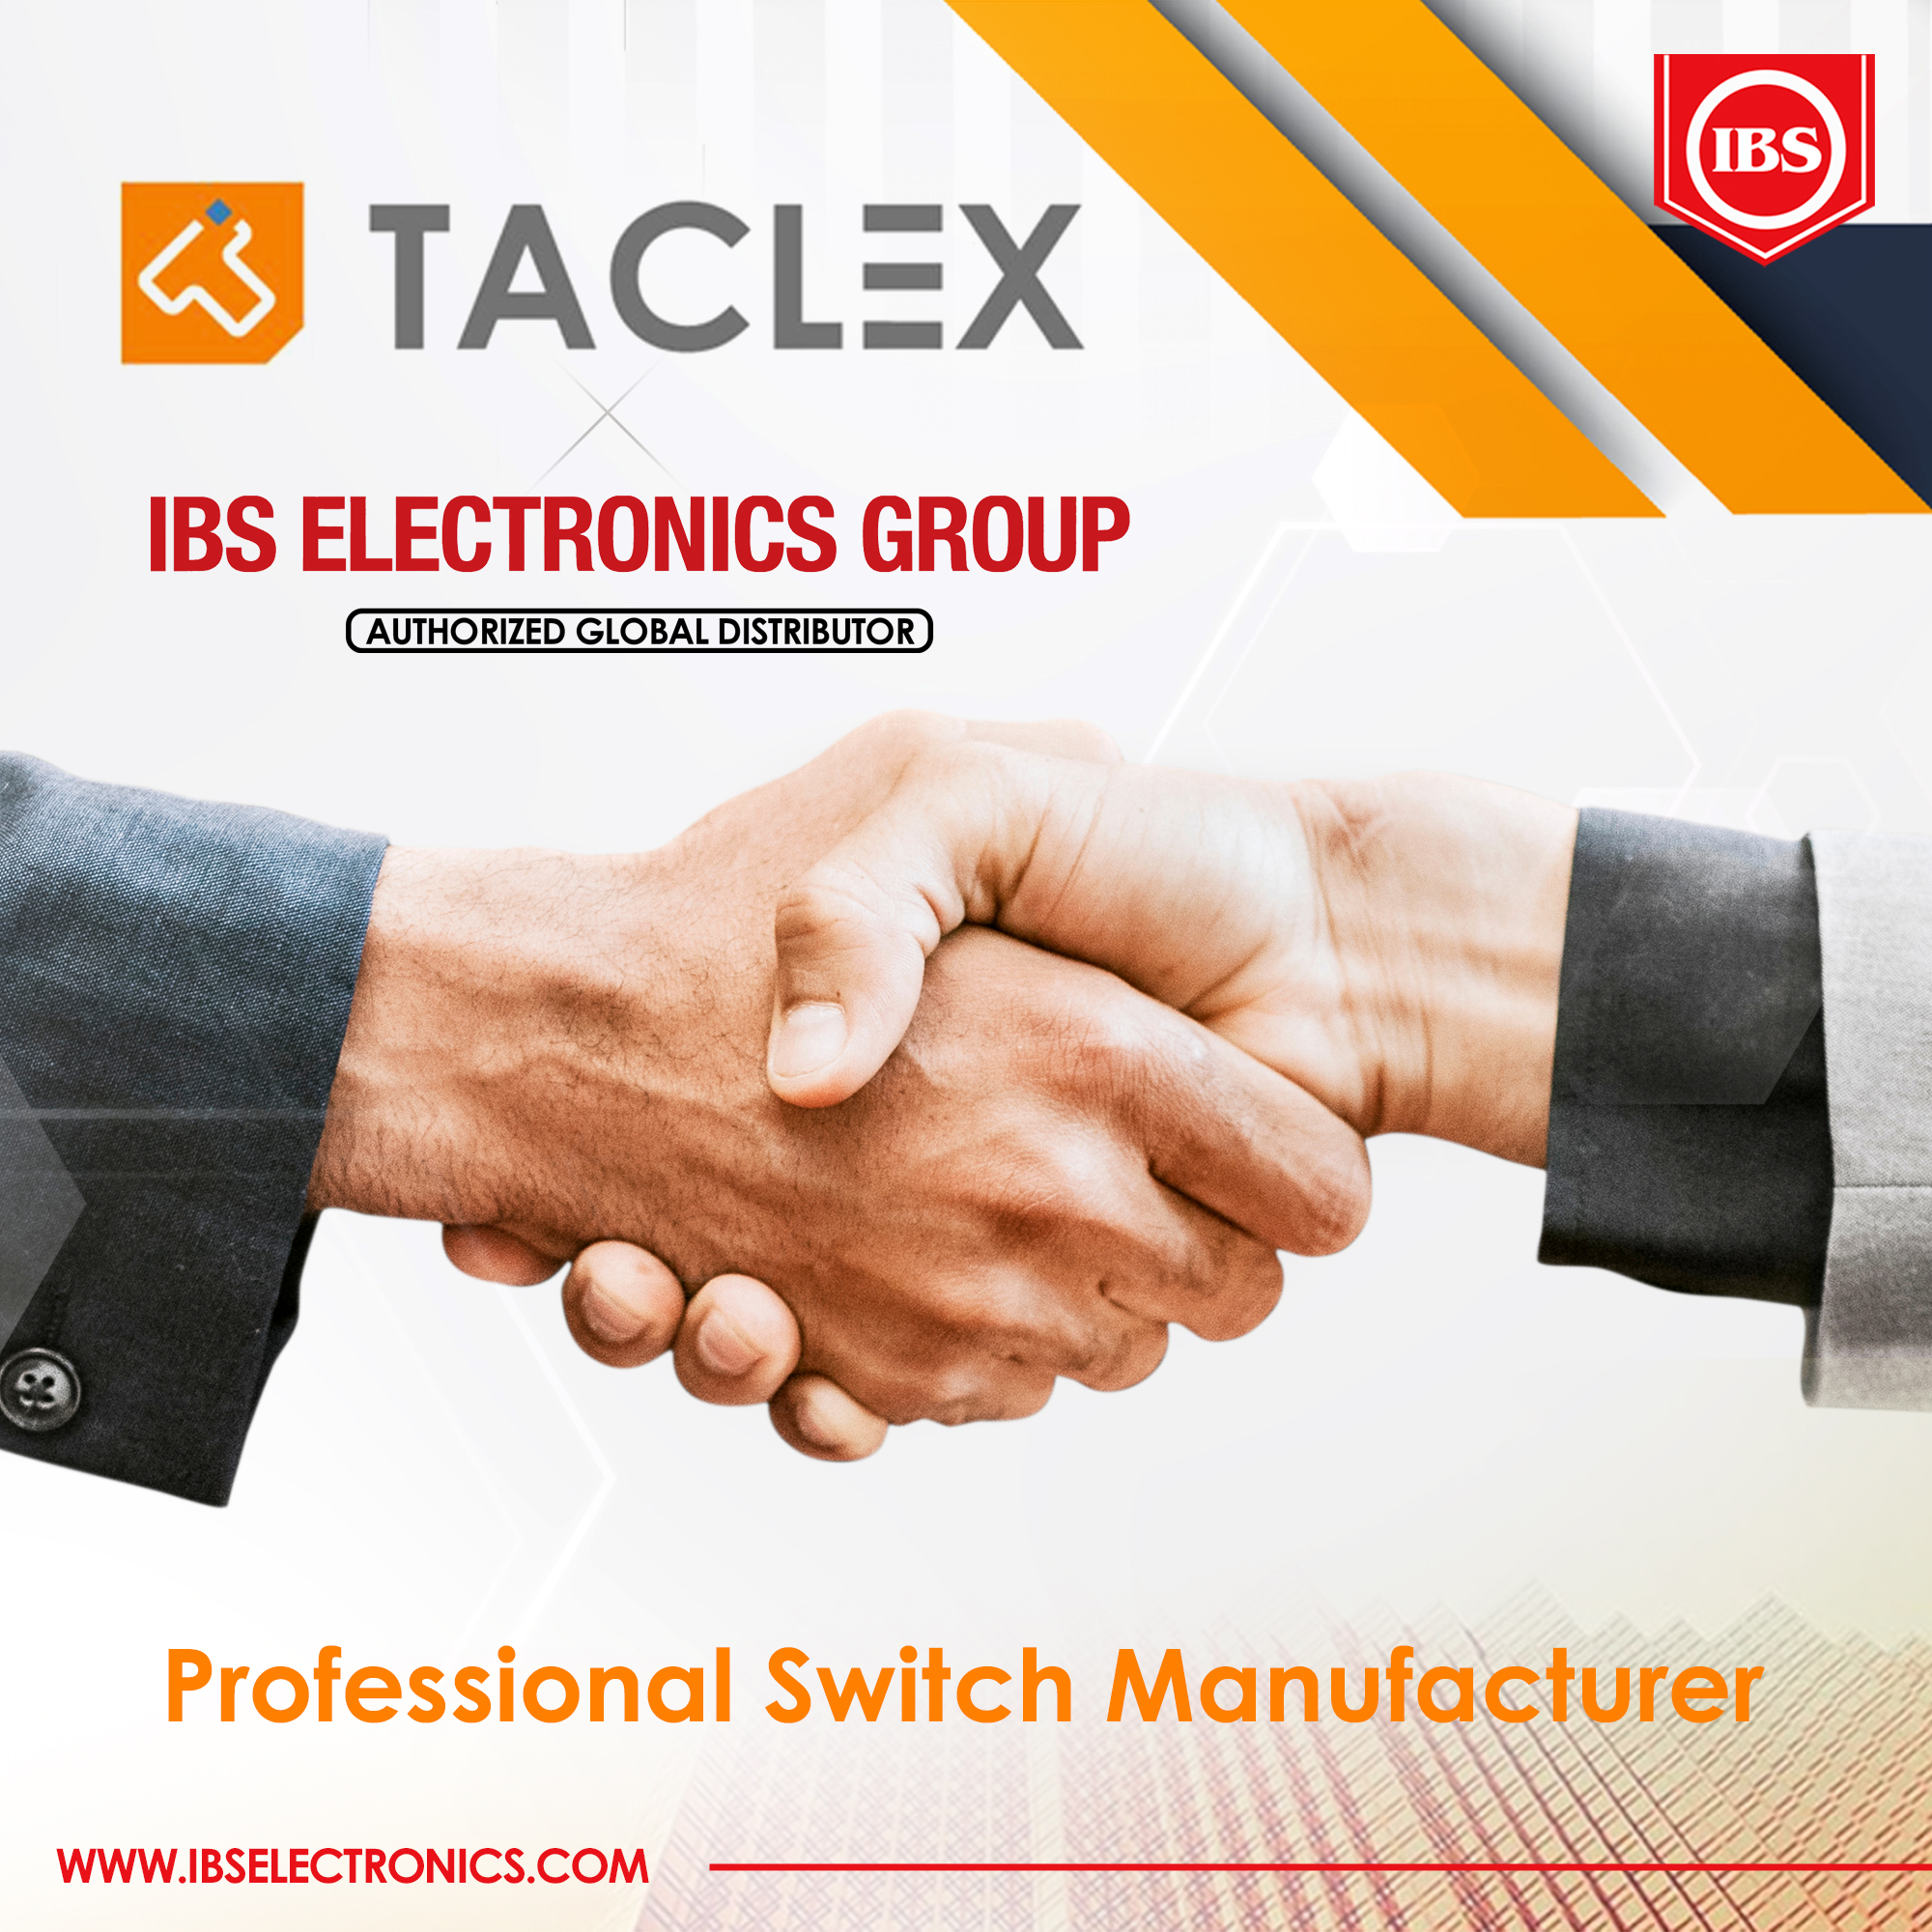 Taclex and IBS Electronics Global Partnership